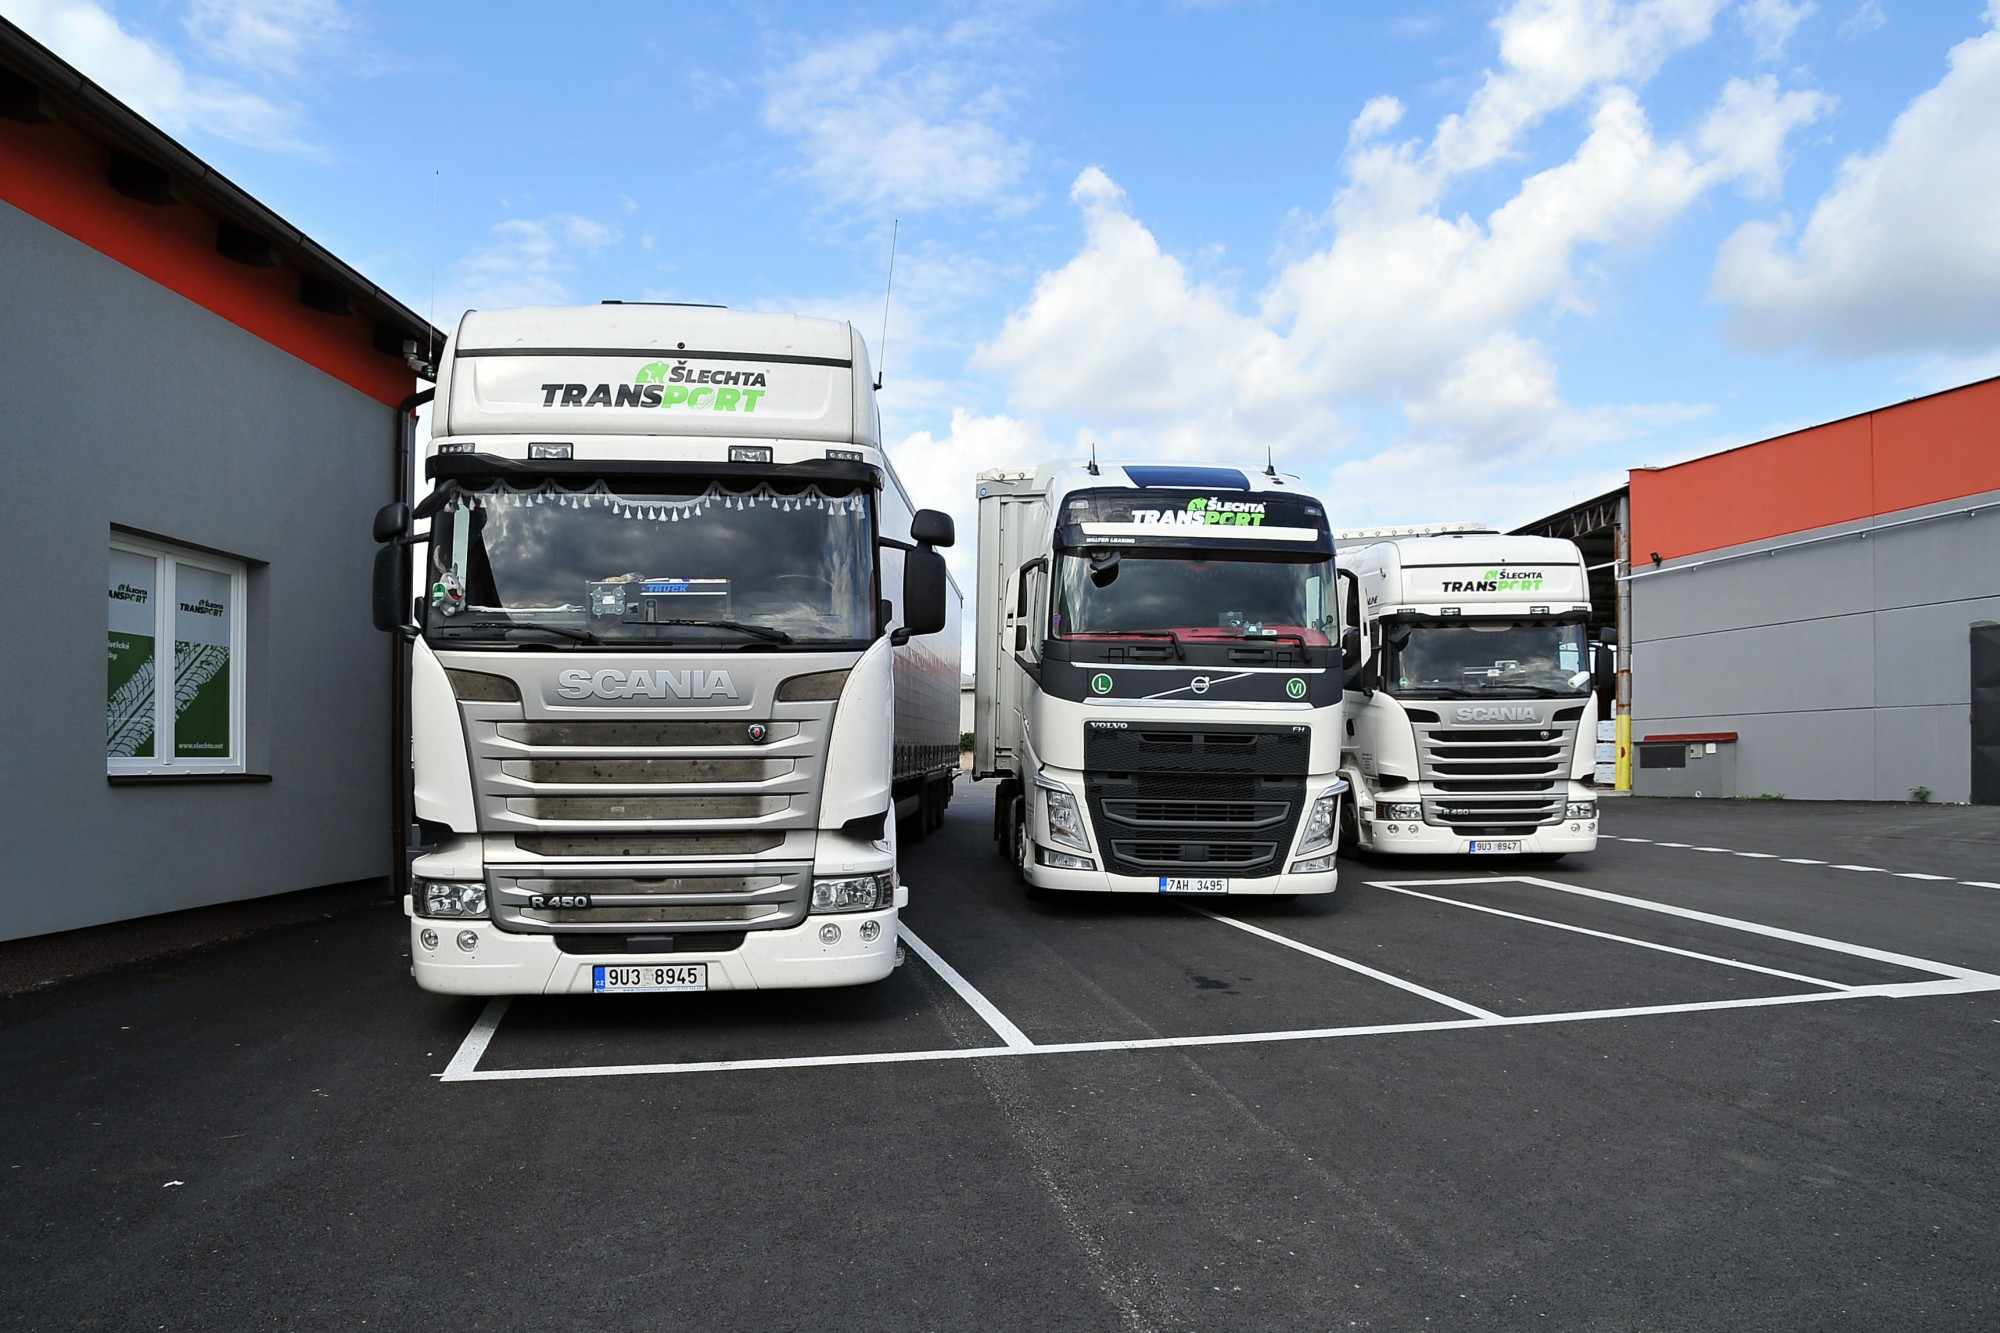 International road haulage